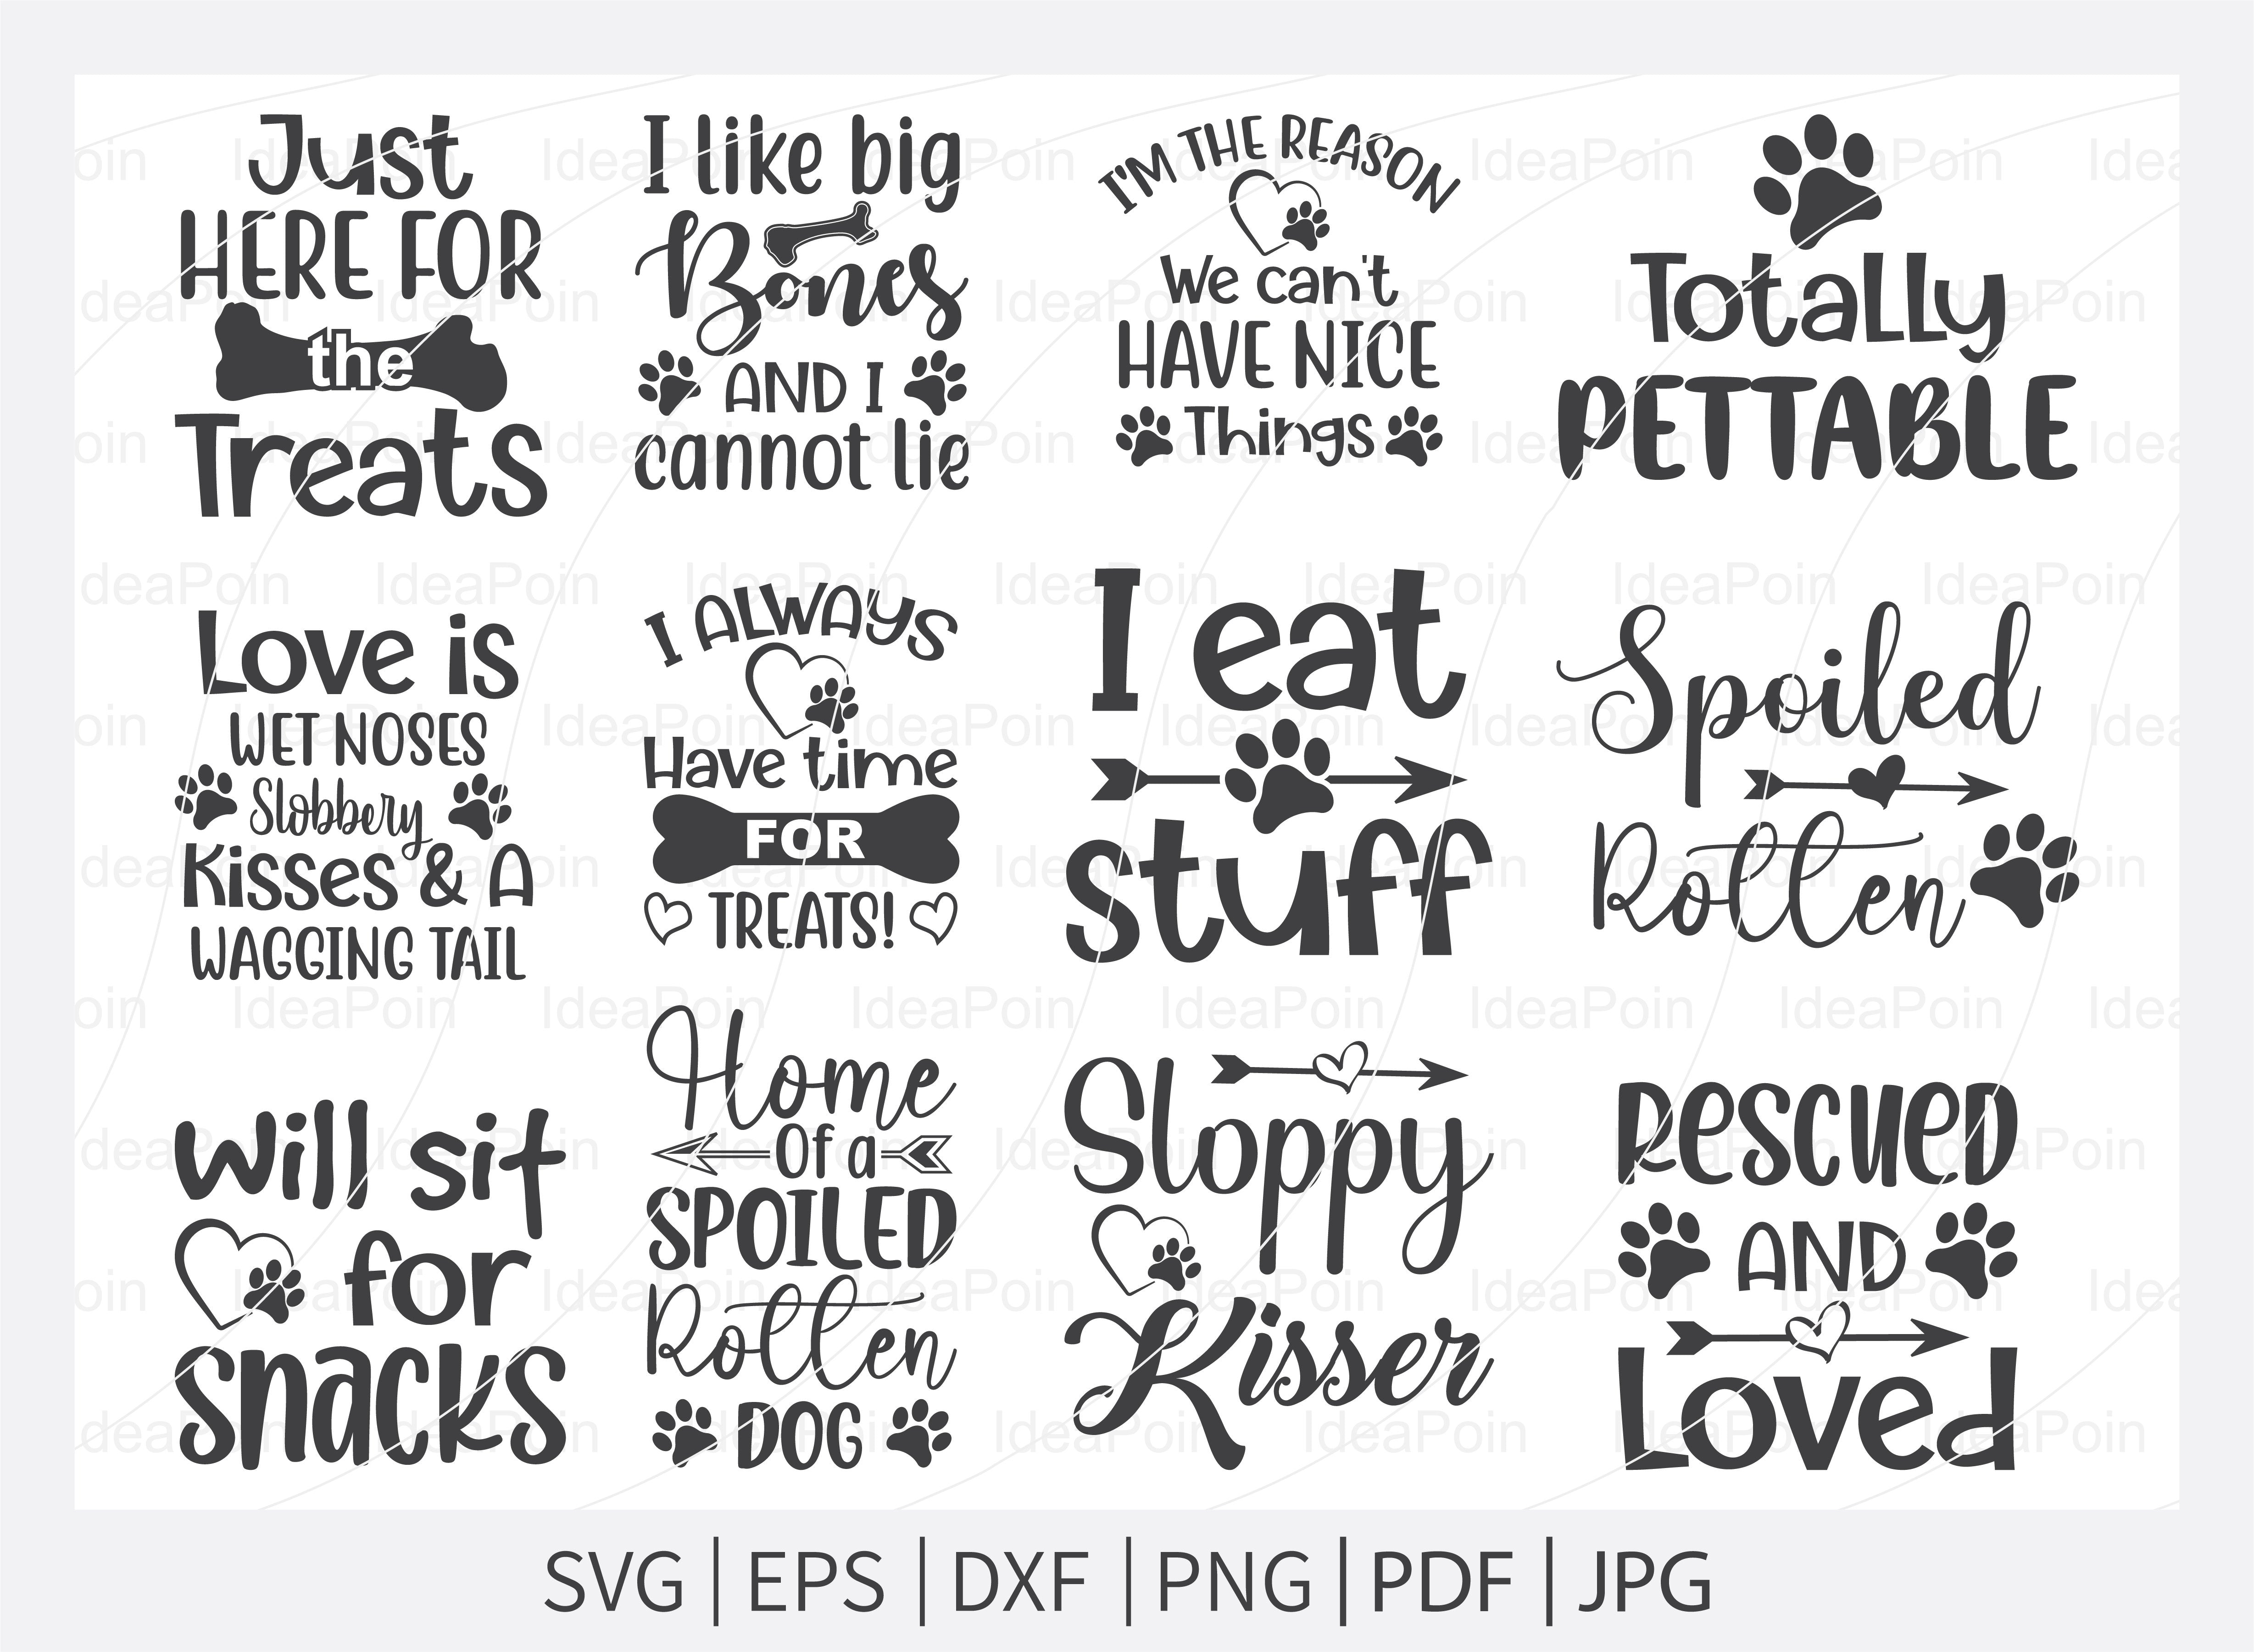 Dog Bandana SVG Bundle, 25 Designs, Funny Dog Bandana SVG Cut Files, Dog  Quotes SVG, Live Love Woof SVG